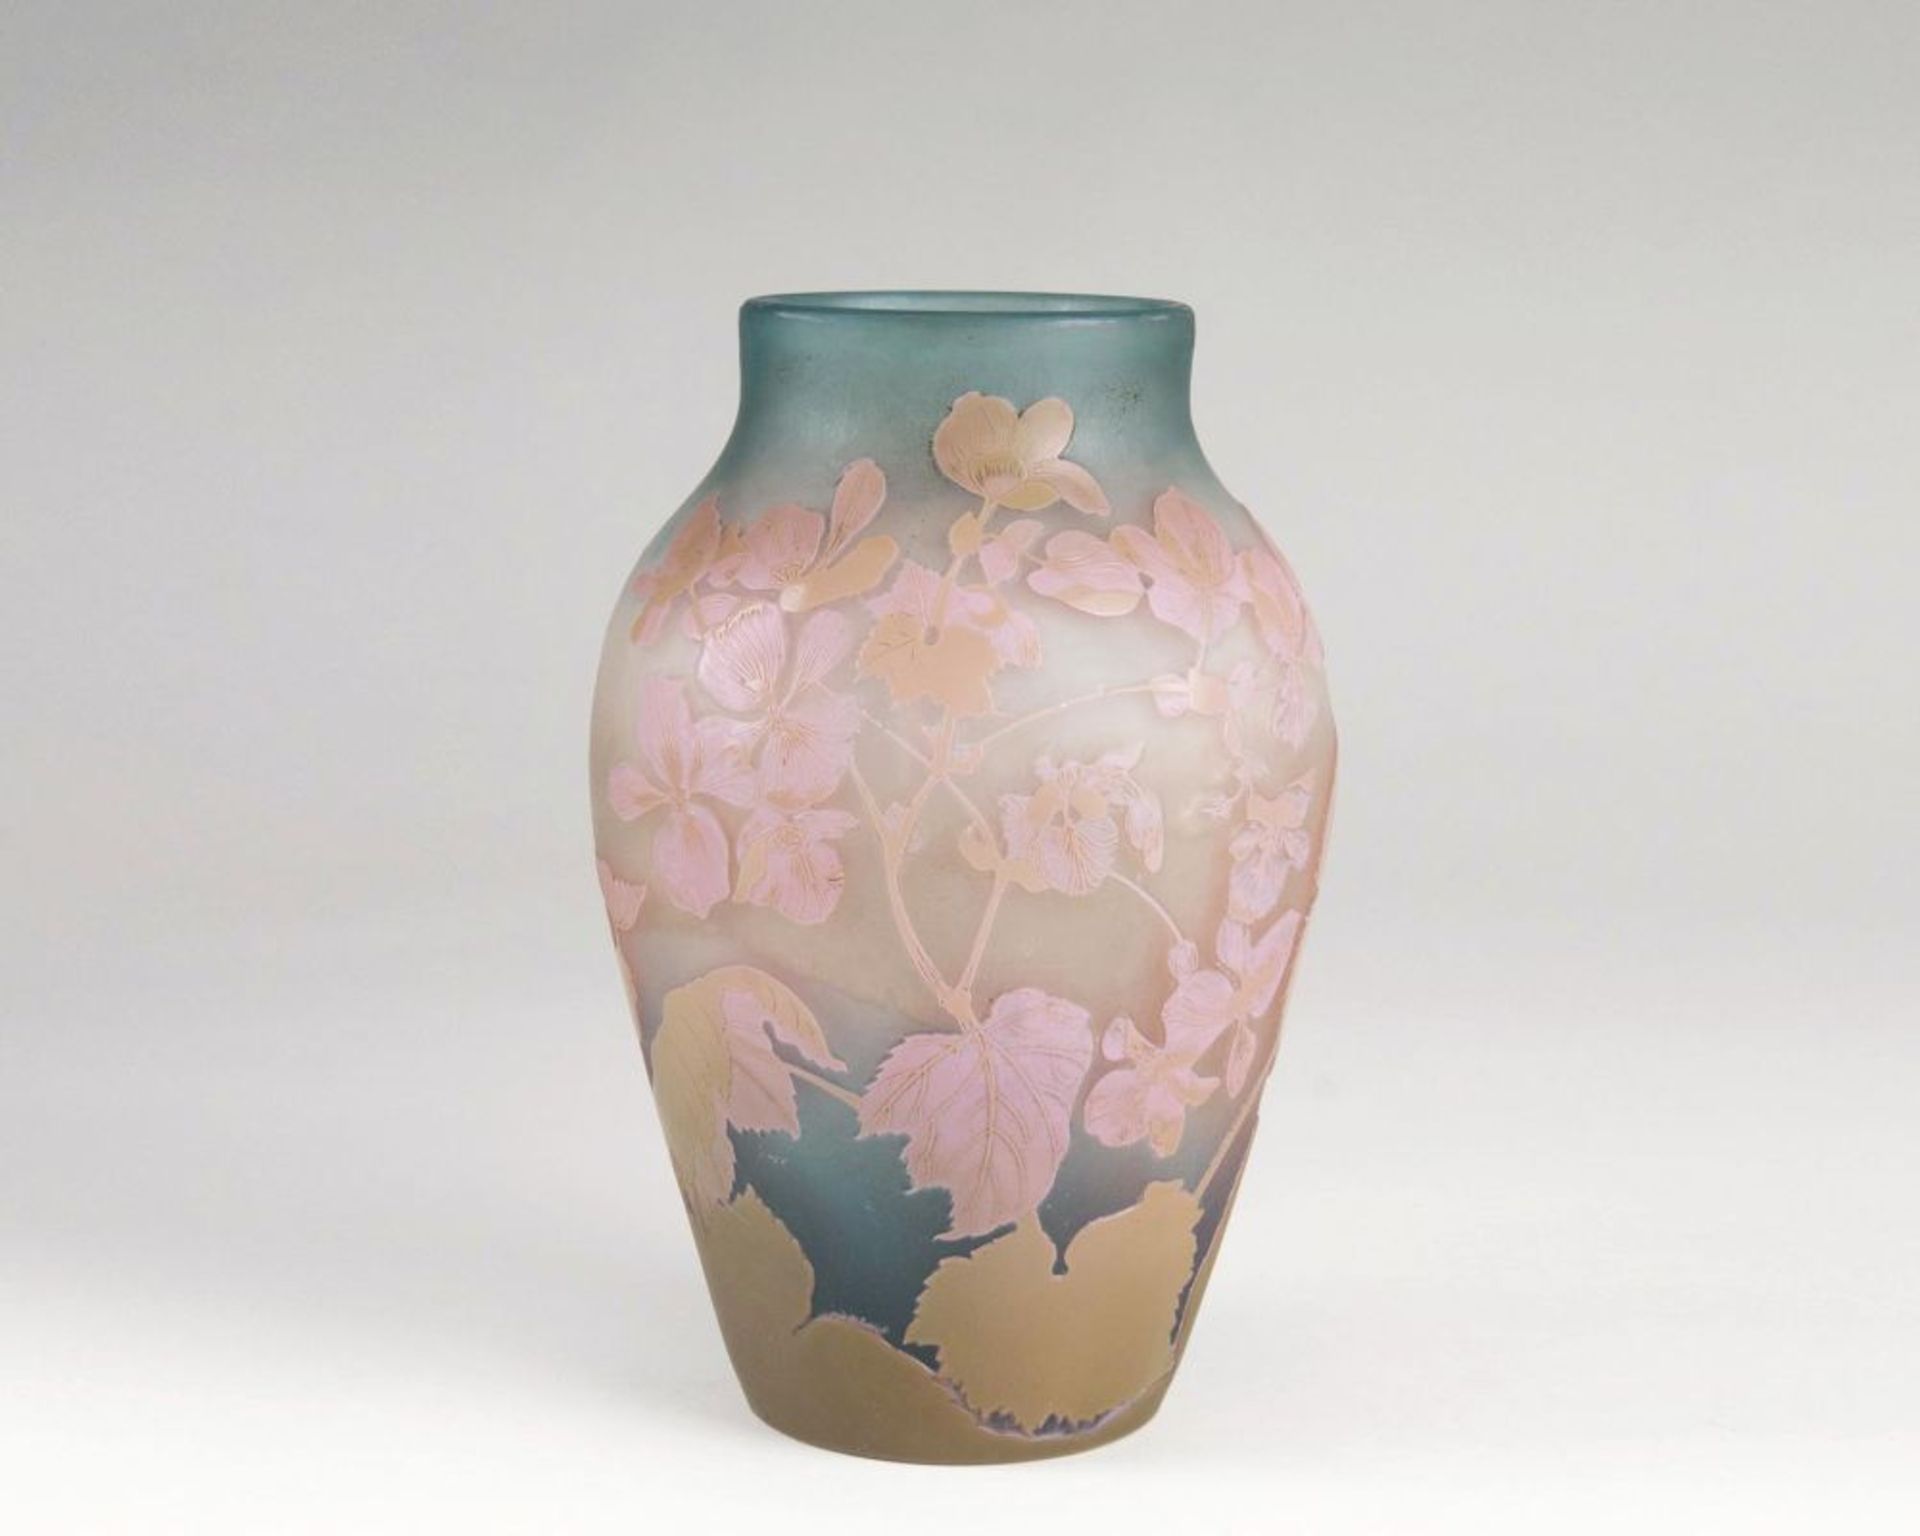 Emile Gallé(Nancy 1846 - Nancy 1904)Vase mit ClematisNancy, 1905-10. Überfangglas, farblos,